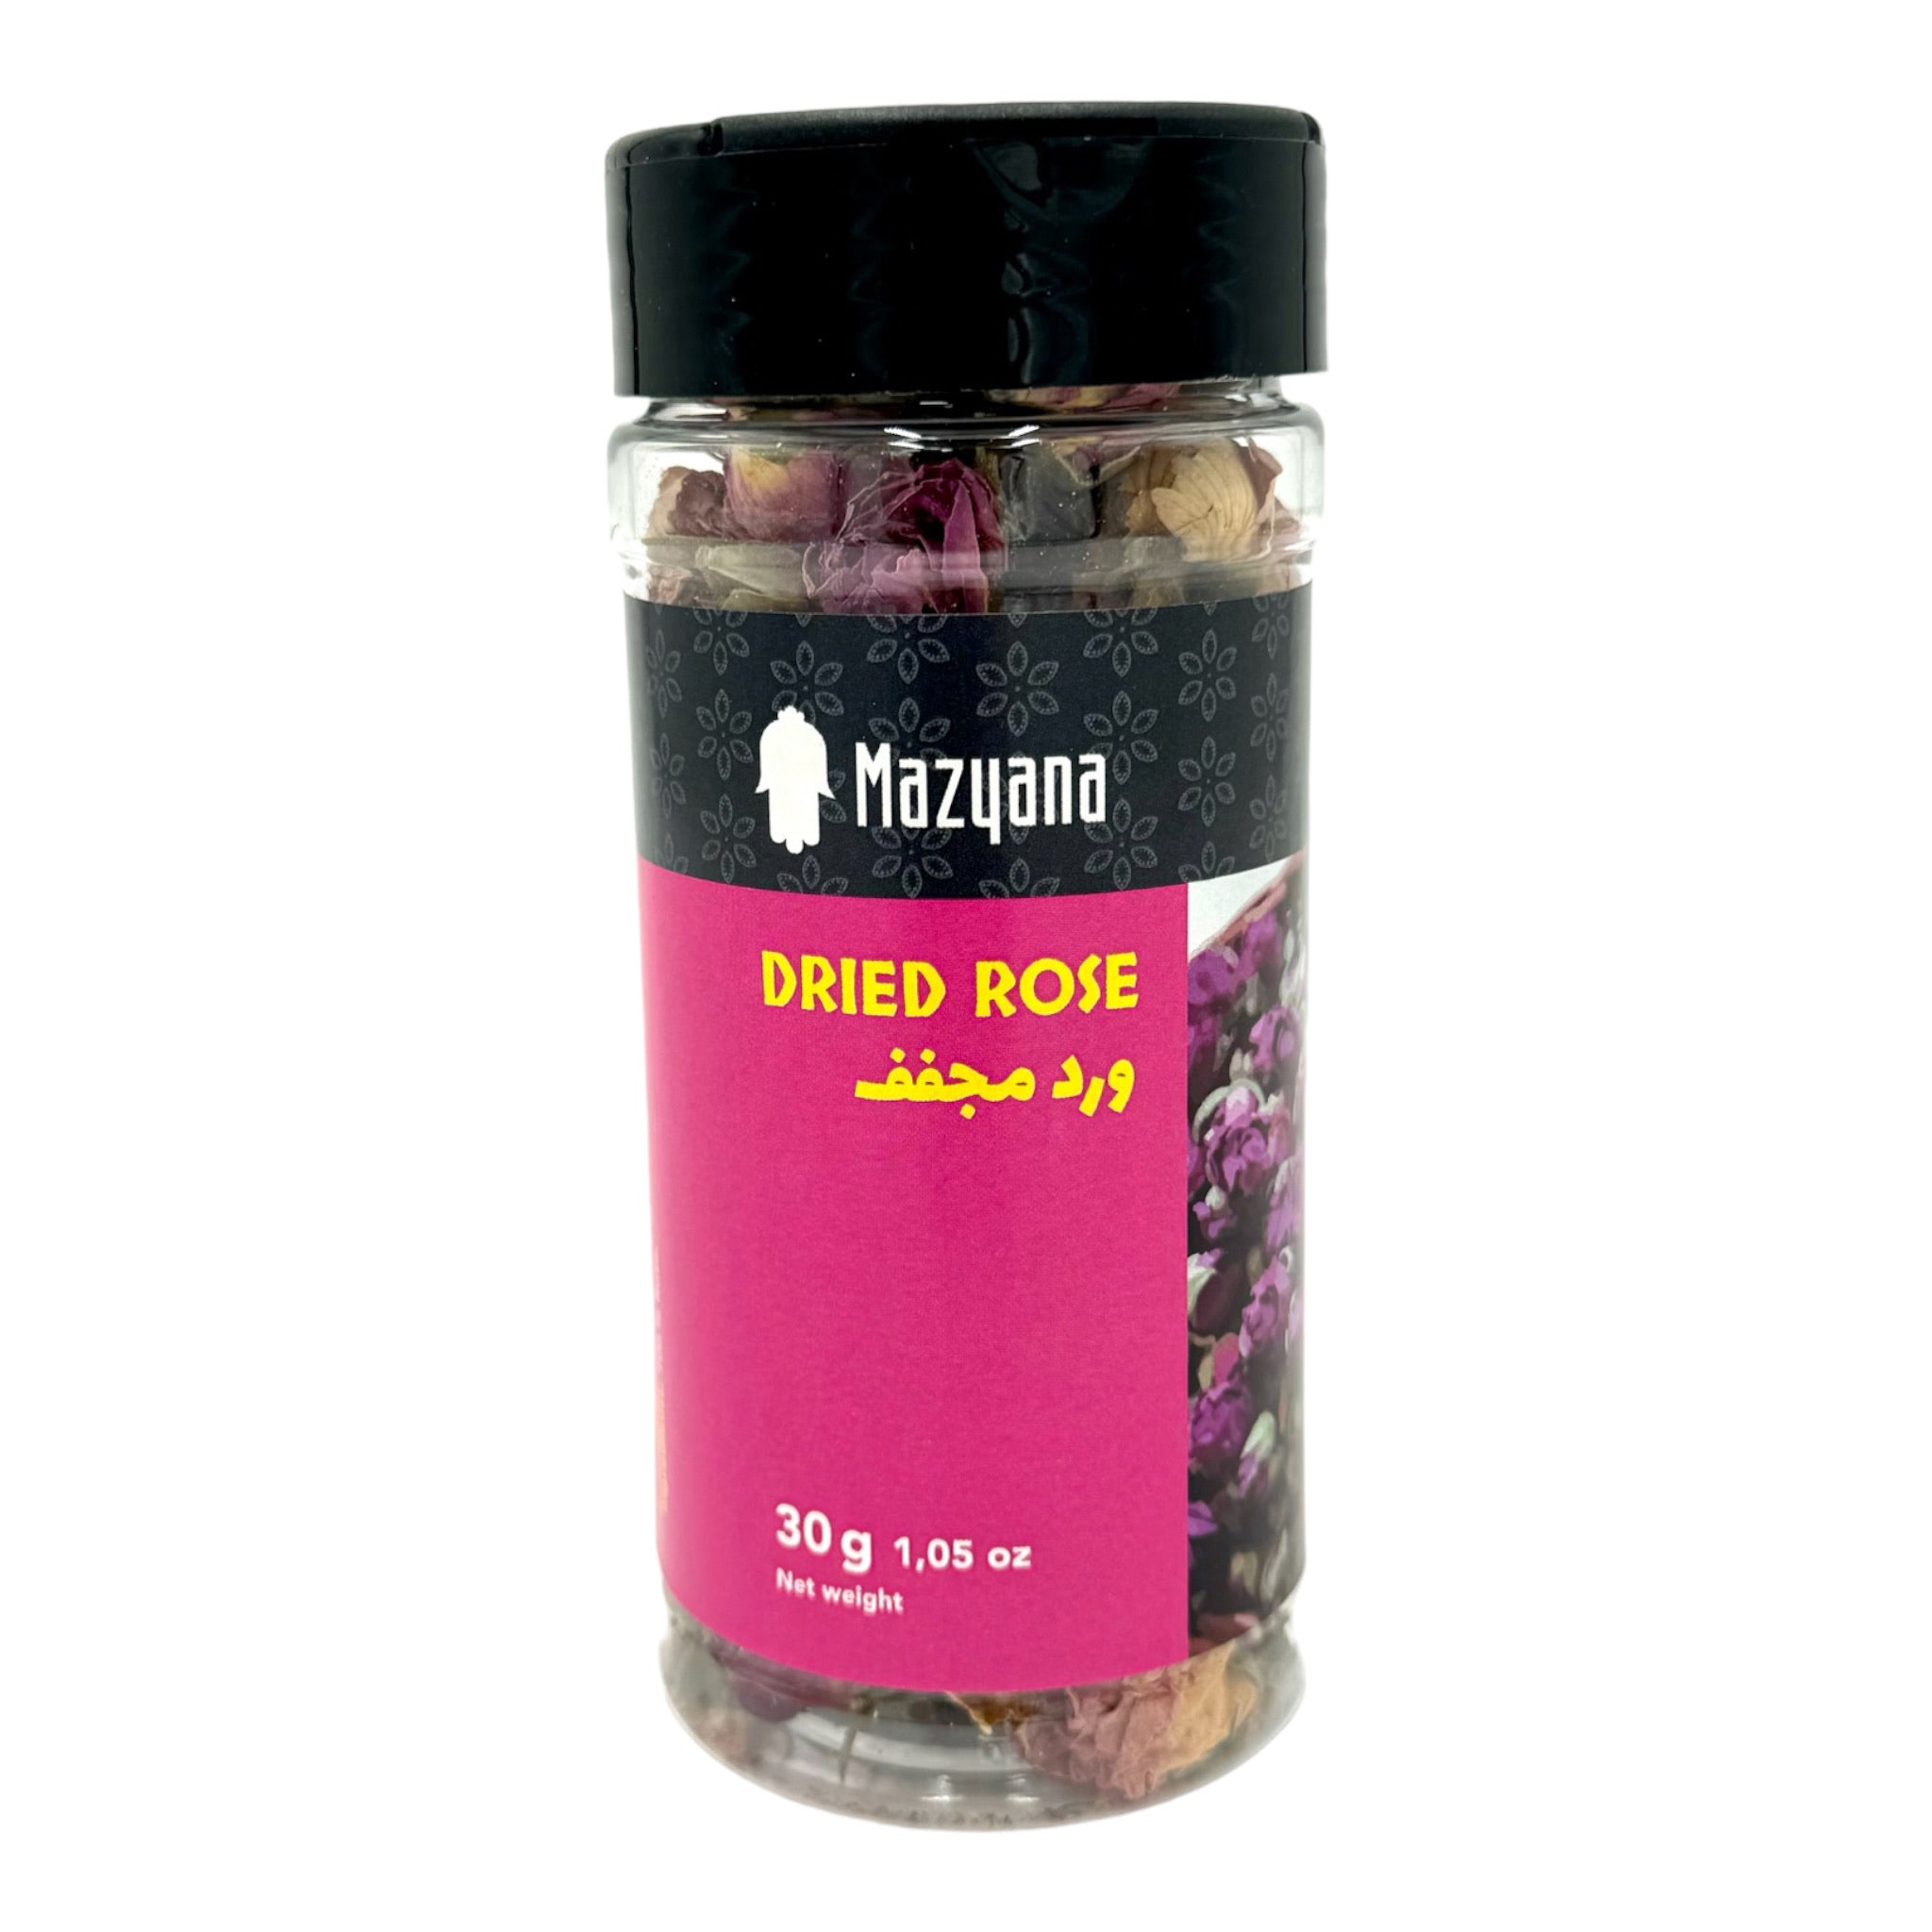 Dried Rose Buds Mazyana Brand